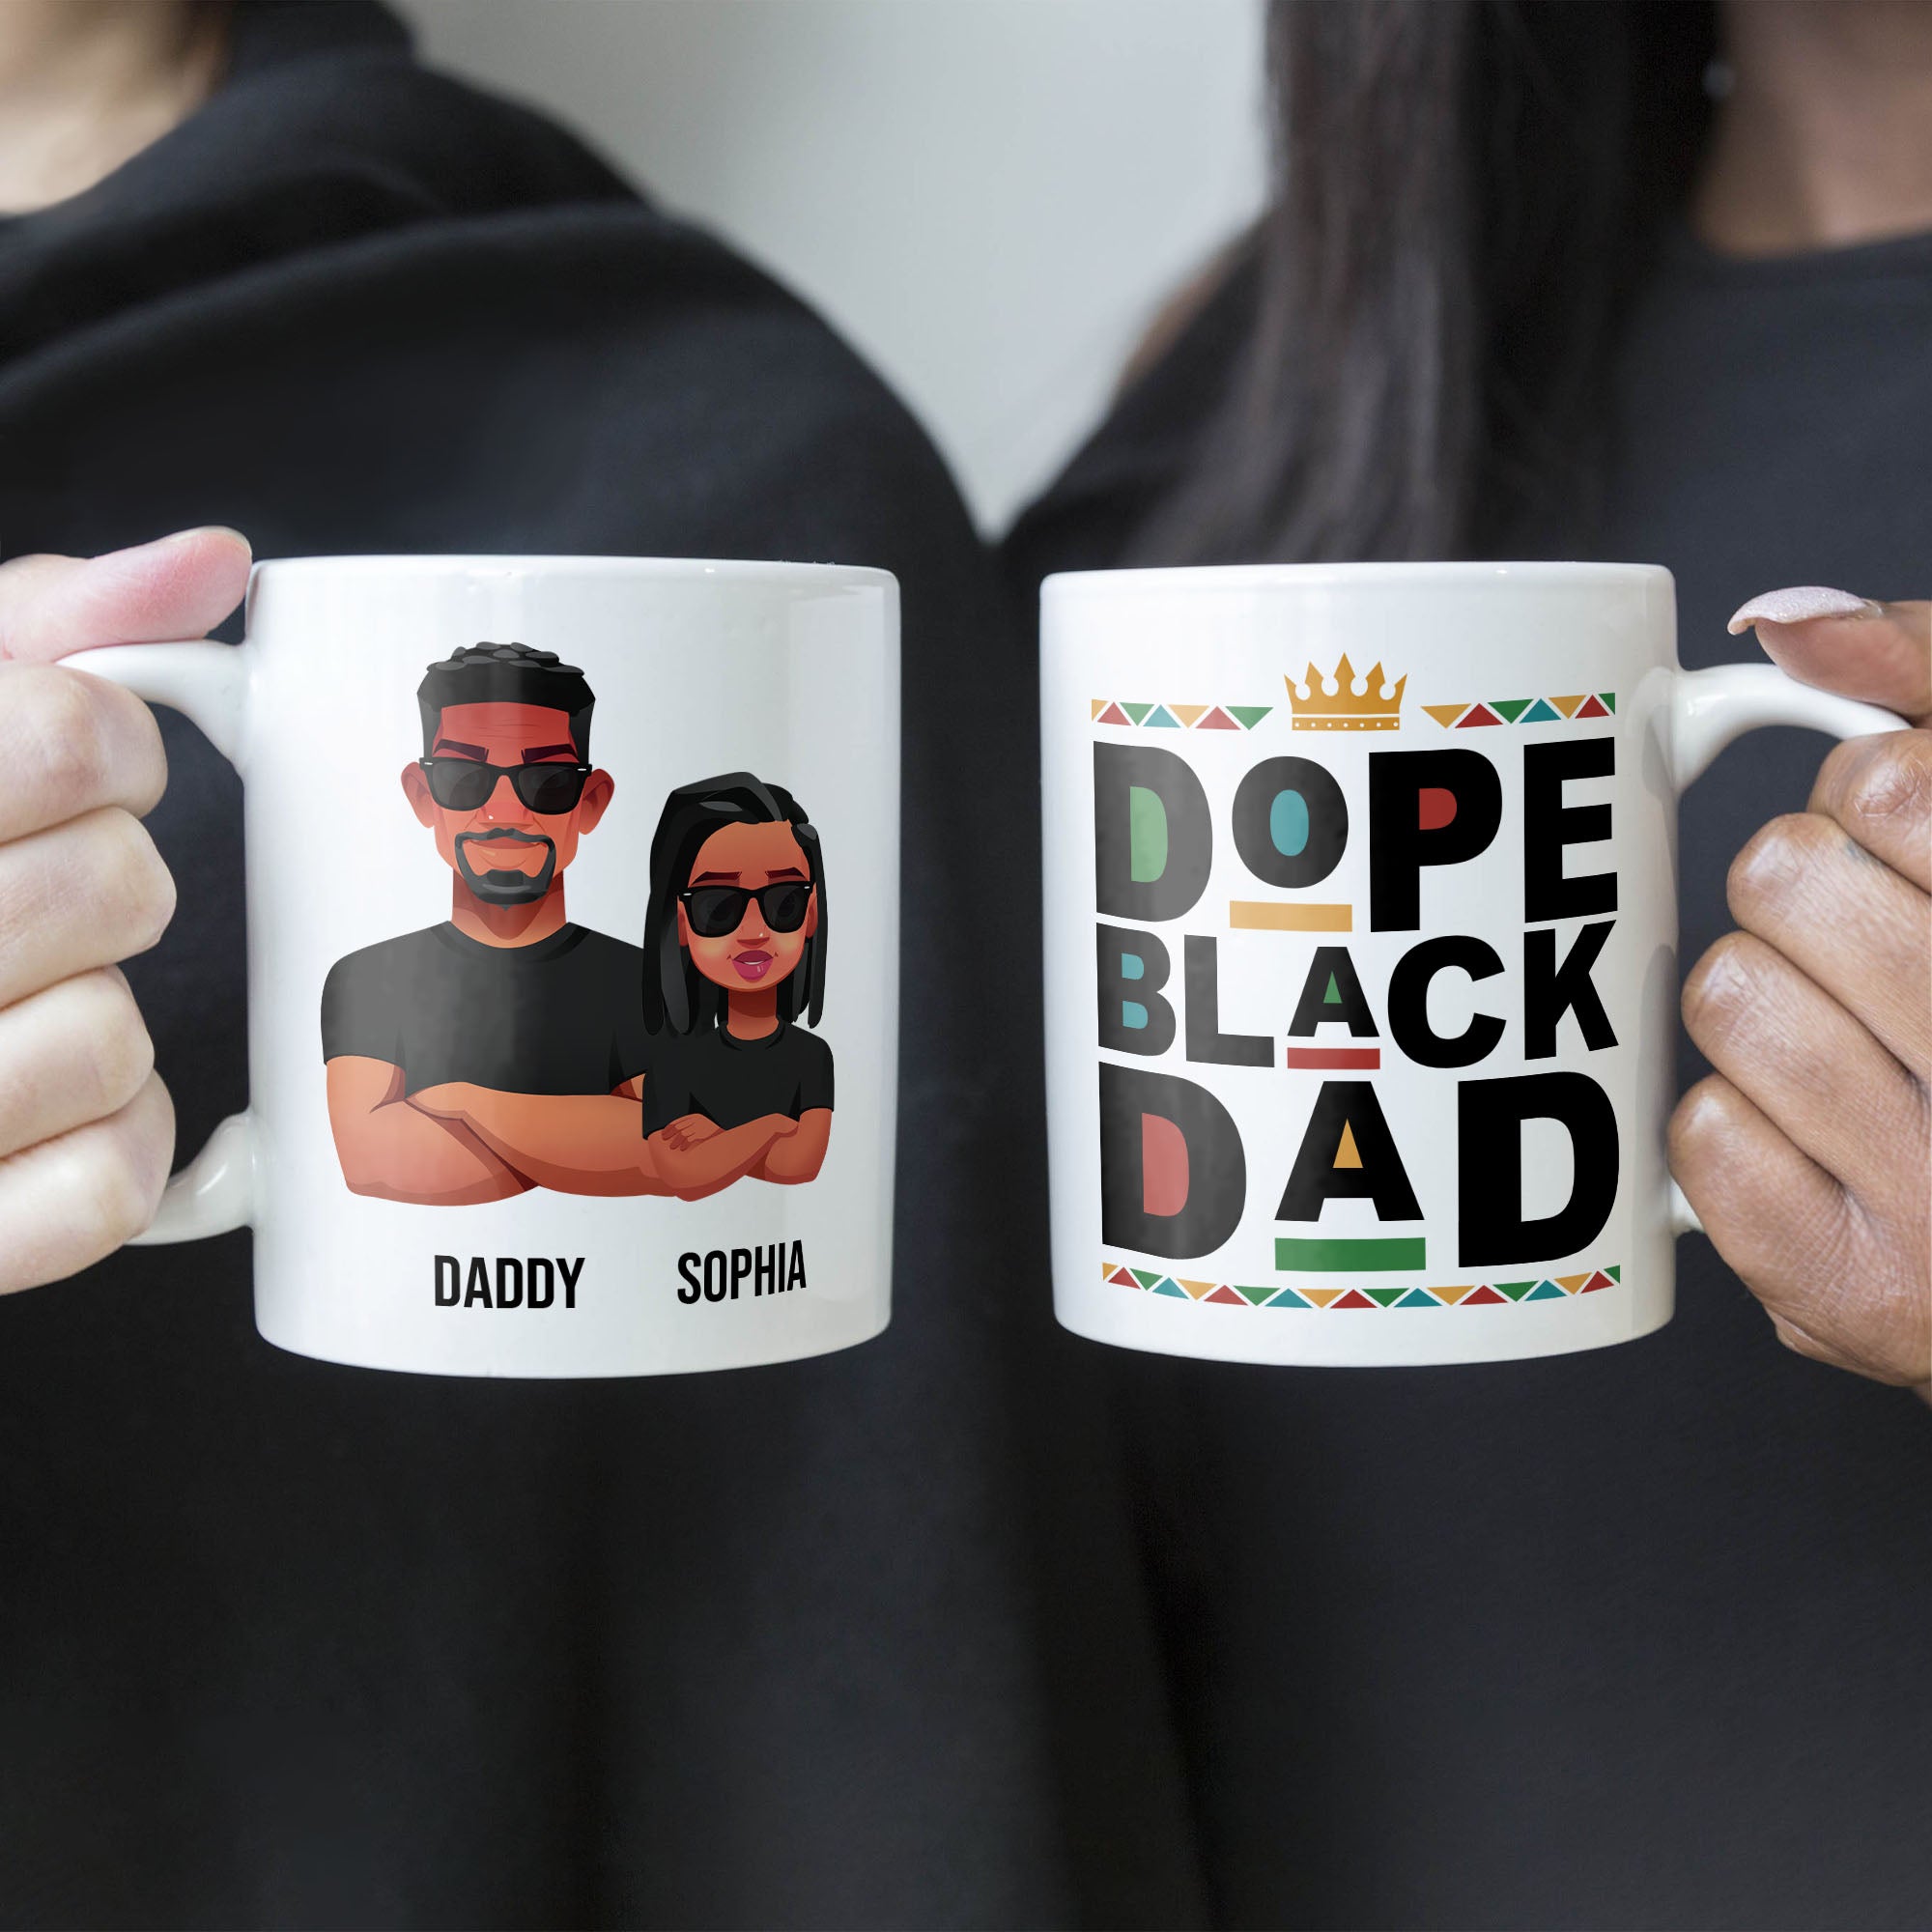 Dope Black Dad - Personalized Mug